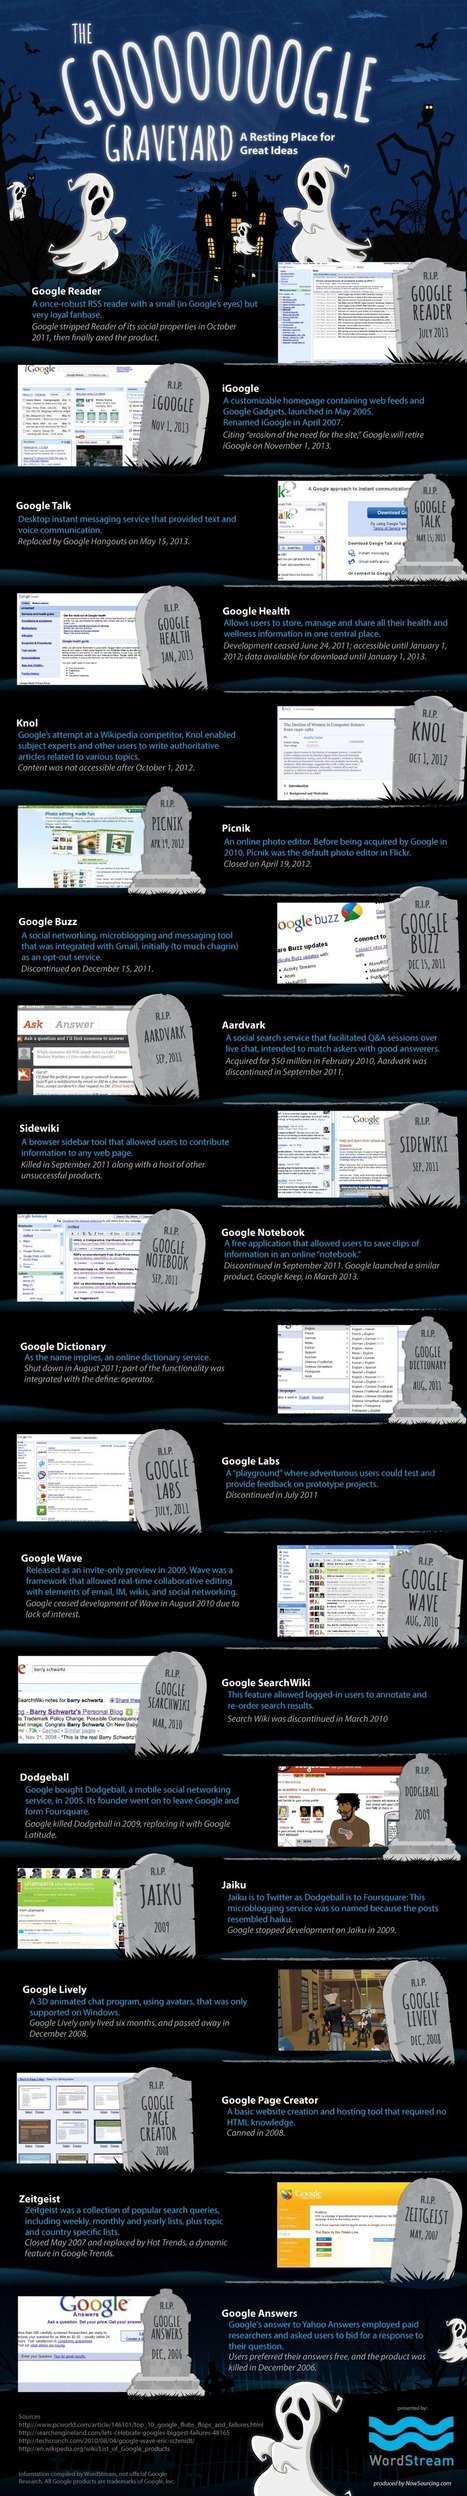 "Google Graveyard"   Google Readers Dies,  Joins Cousins: Infographic | digital marketing strategy | Scoop.it